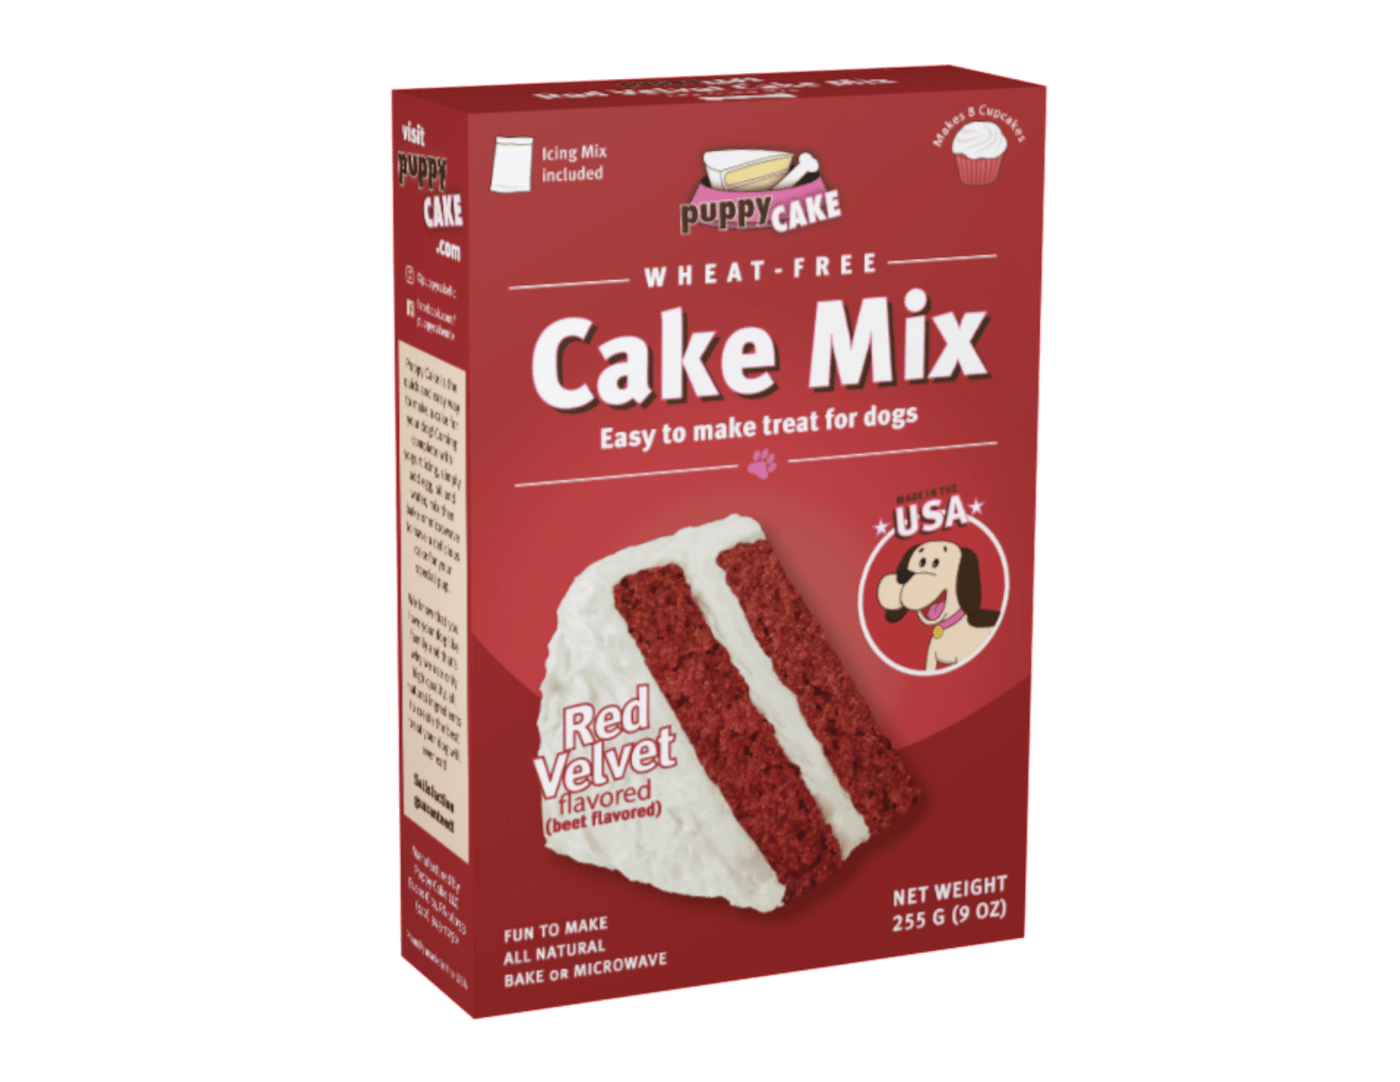 Puppy Cake Mix - Red Velvet (wheat-free) - PetToba-Puppy Cake